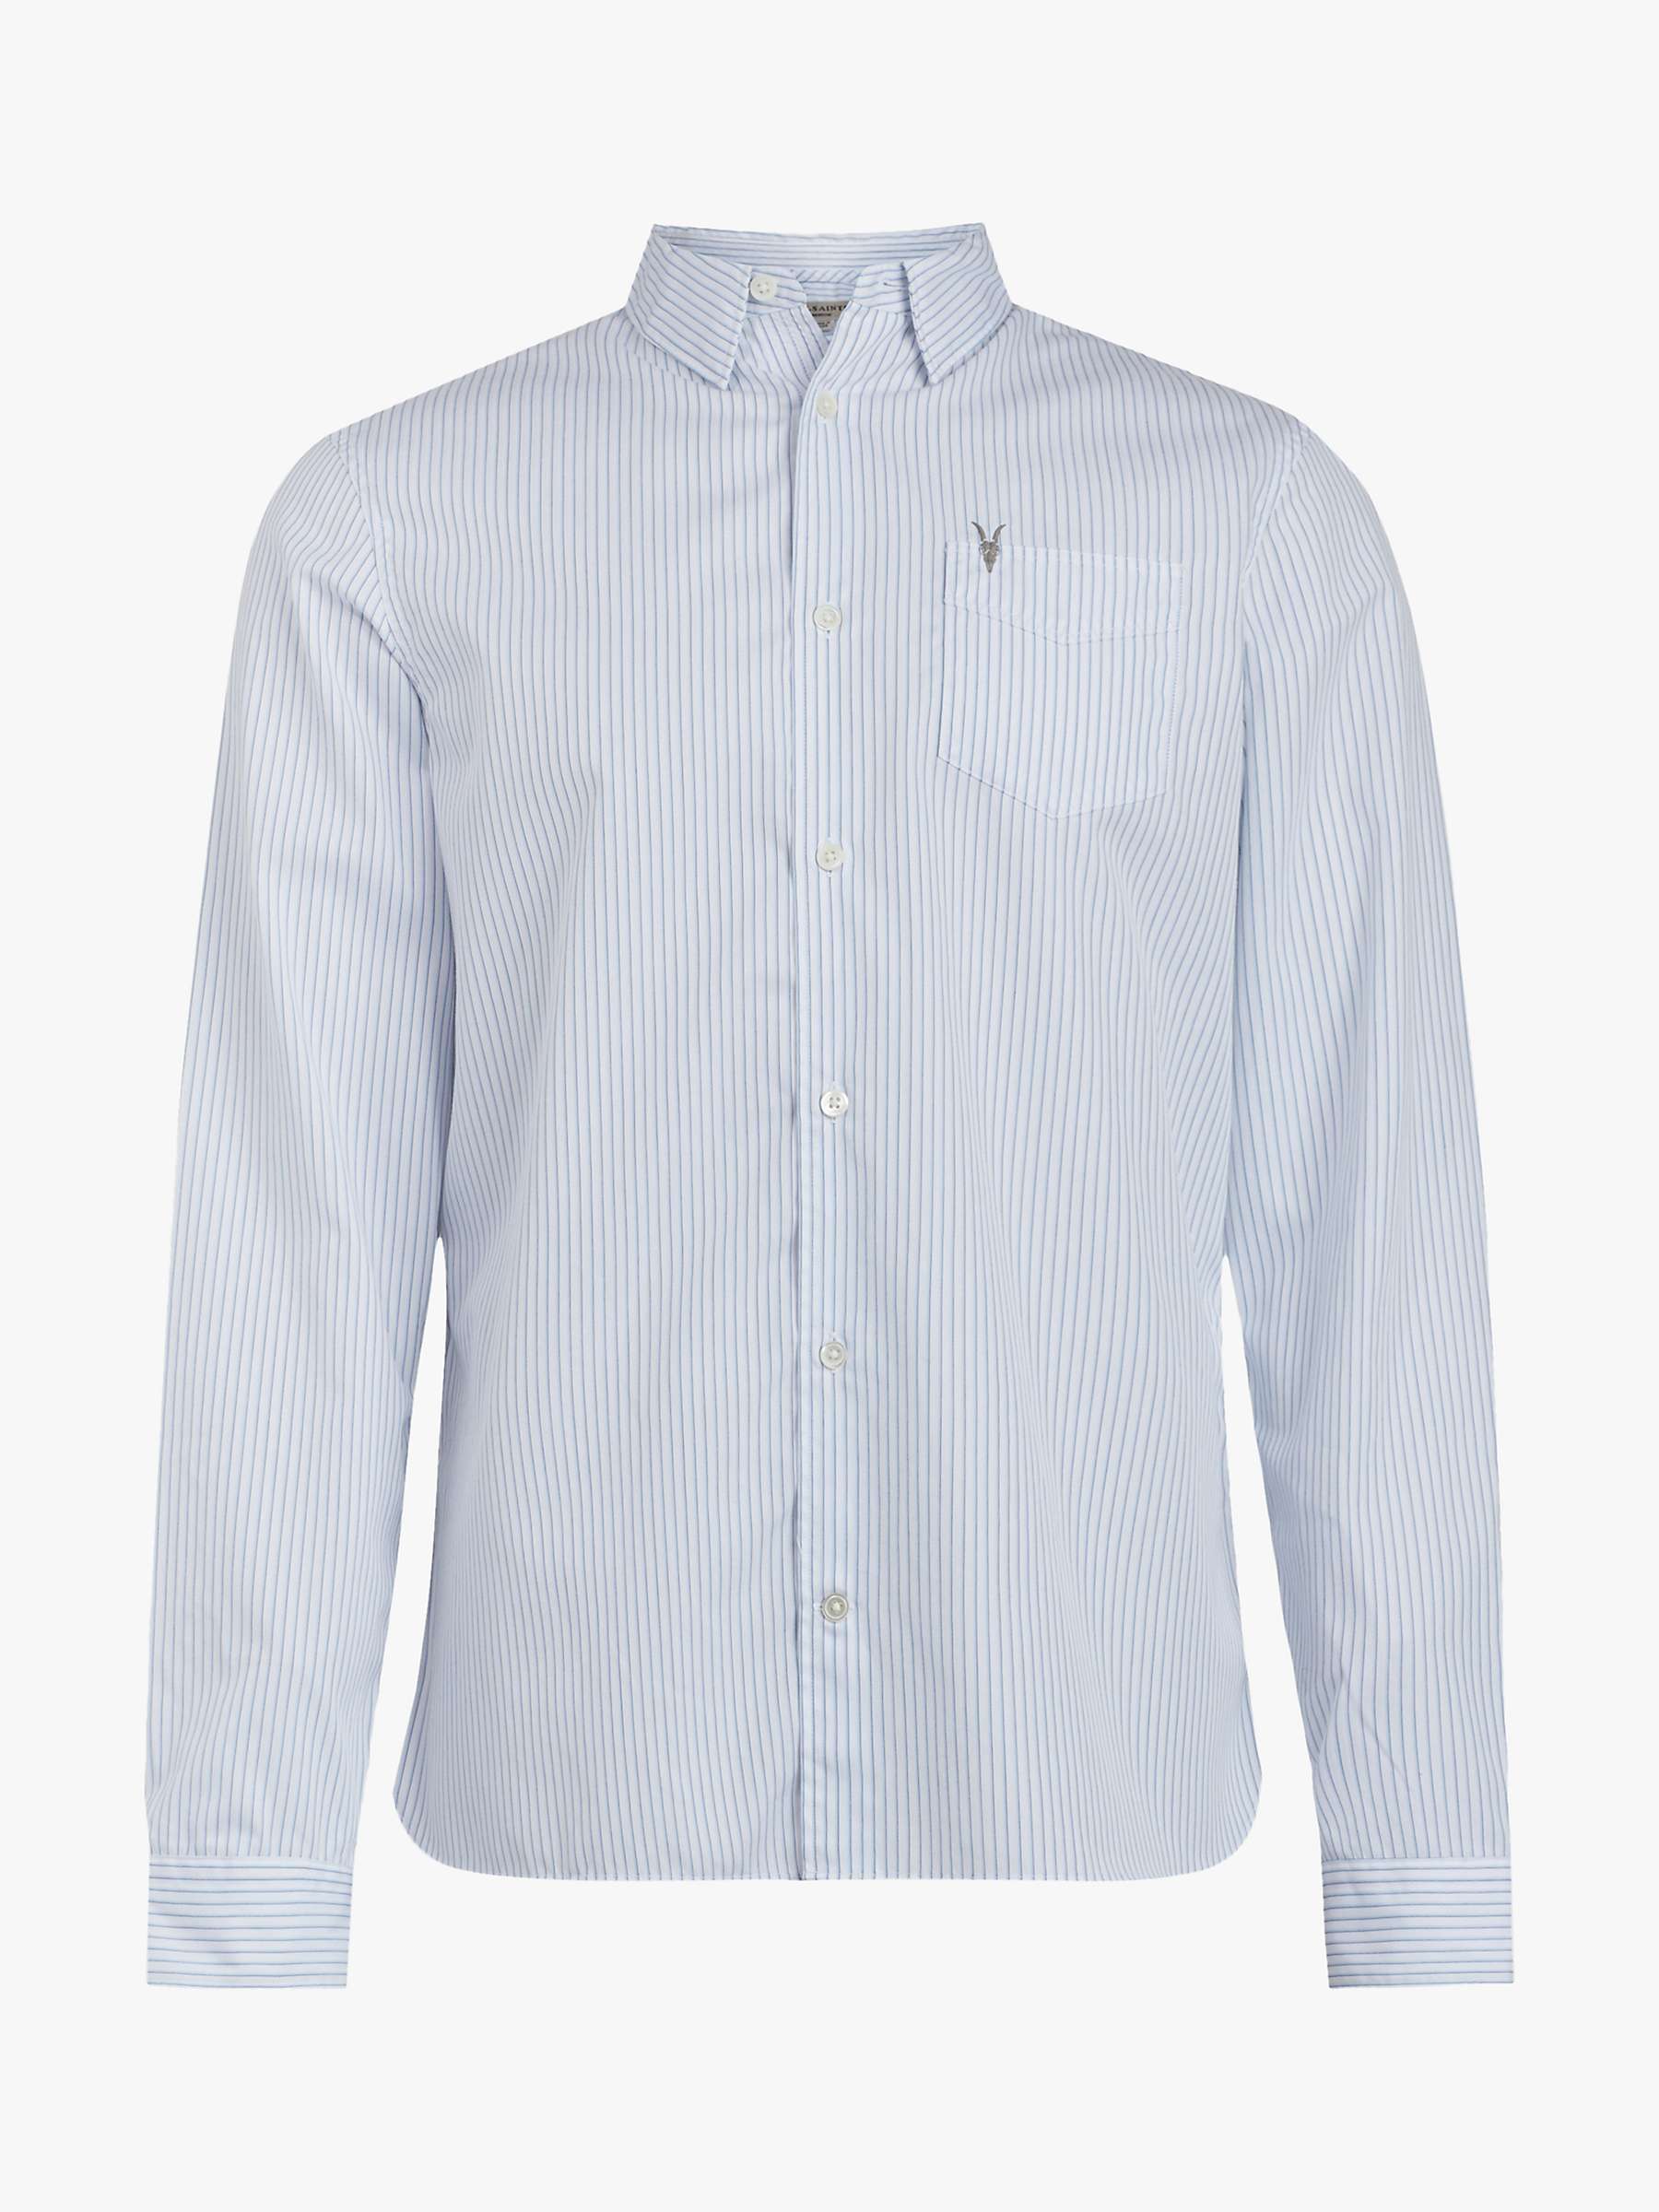 Buy AllSaints Rowland Long Sleeve Stripe Shirt, White/Blue Online at johnlewis.com